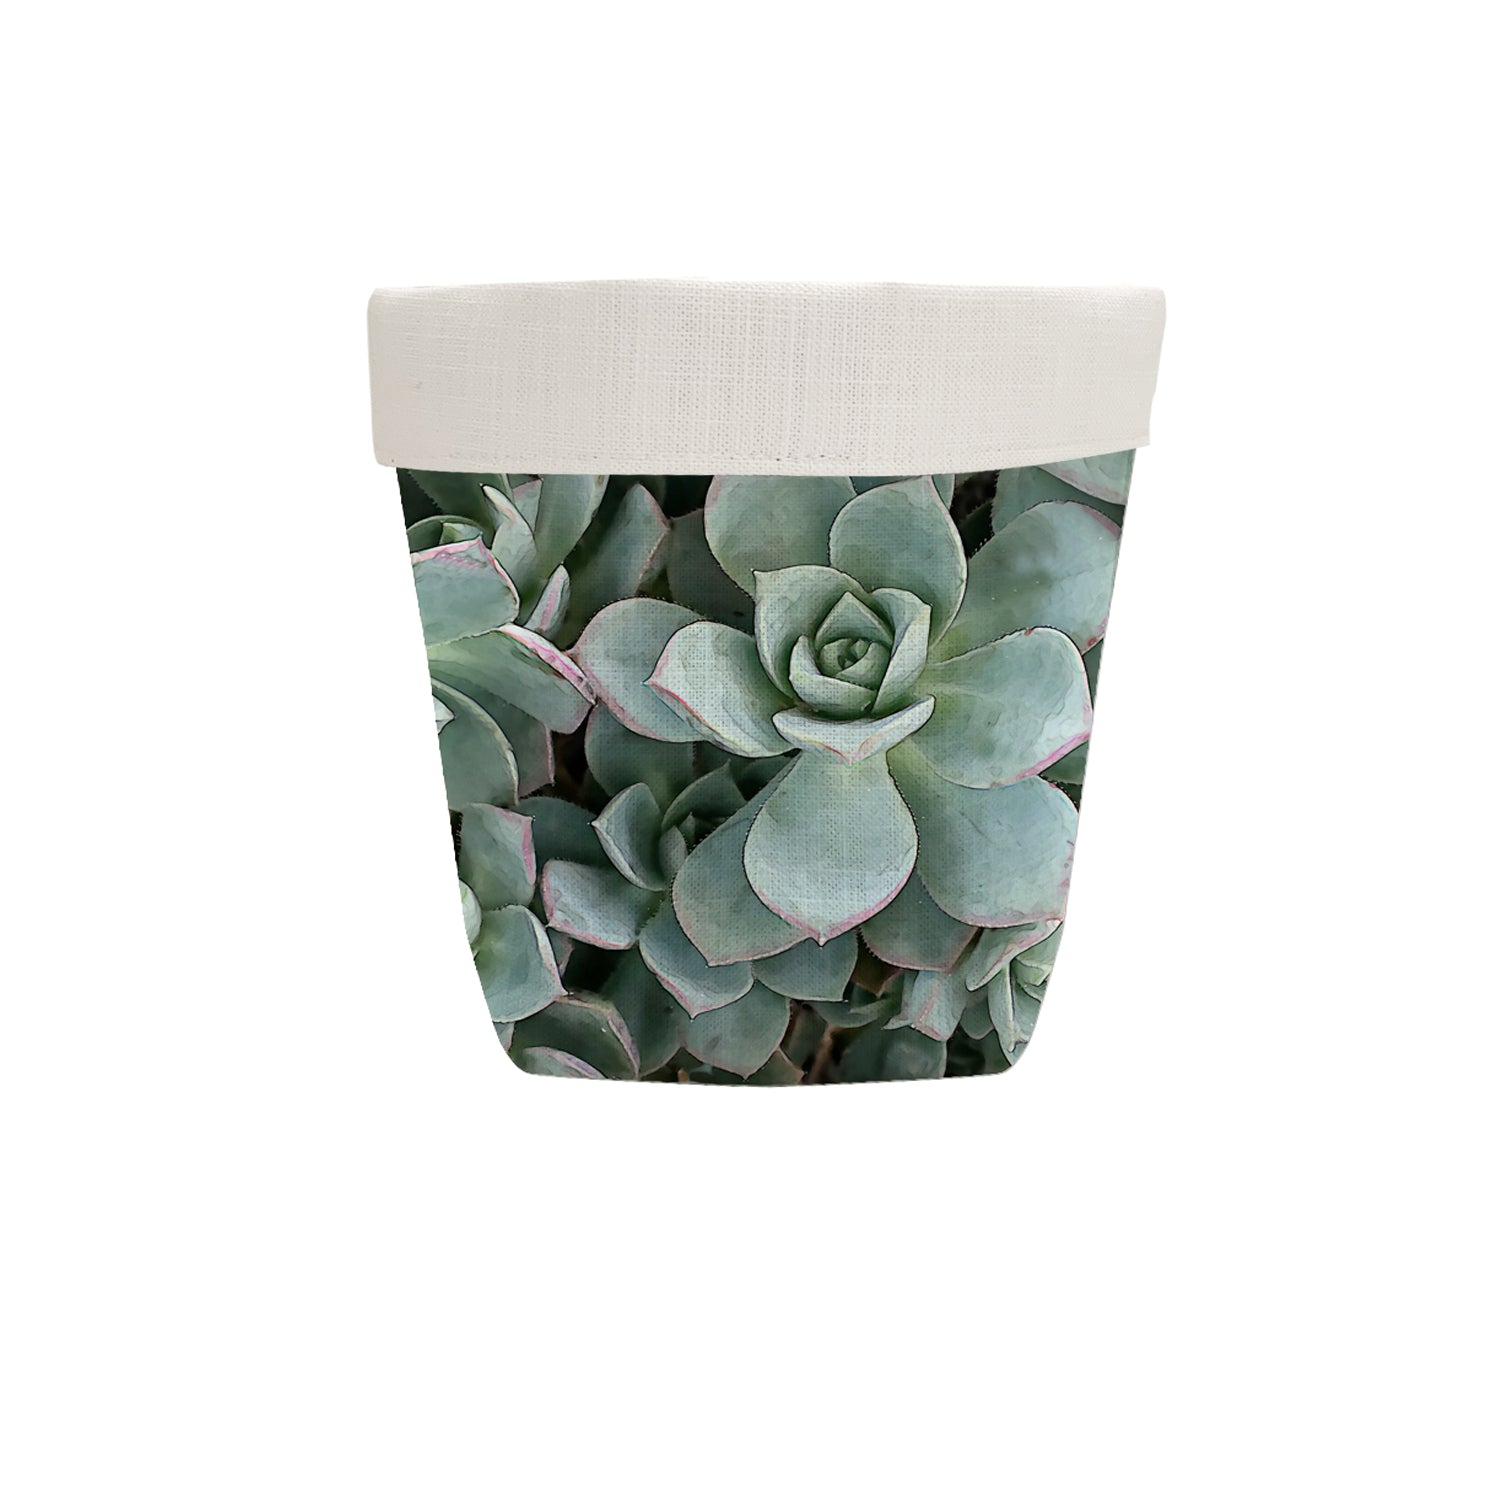 Fabric Pot in Succulent Green